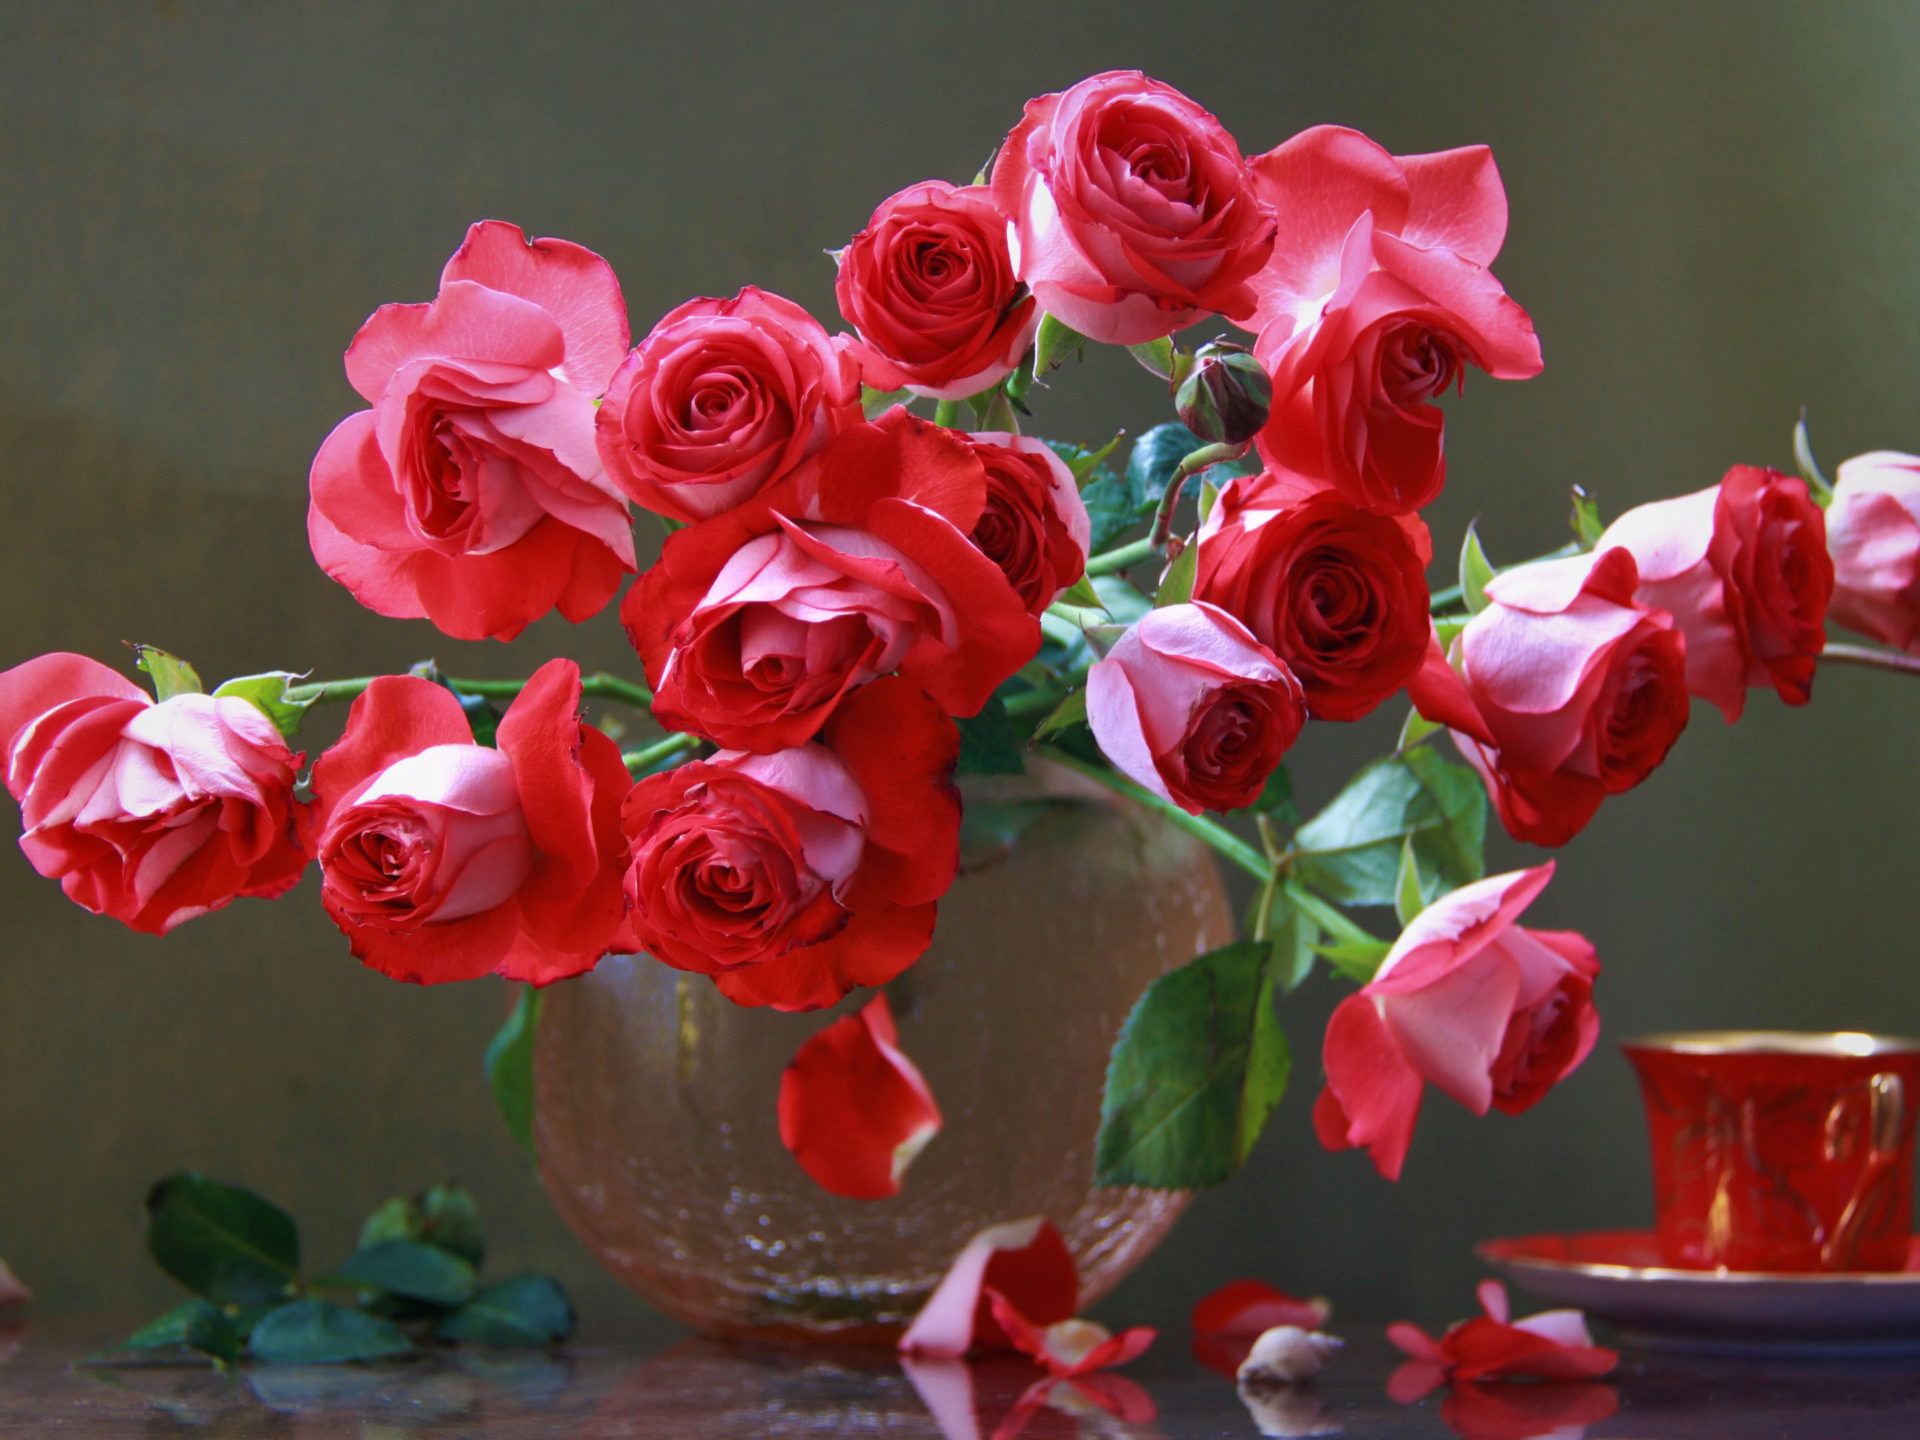 Red roses bouquet vase cup 4K Ultra HD Wallpaper for Desktop, Wallpaper13.com